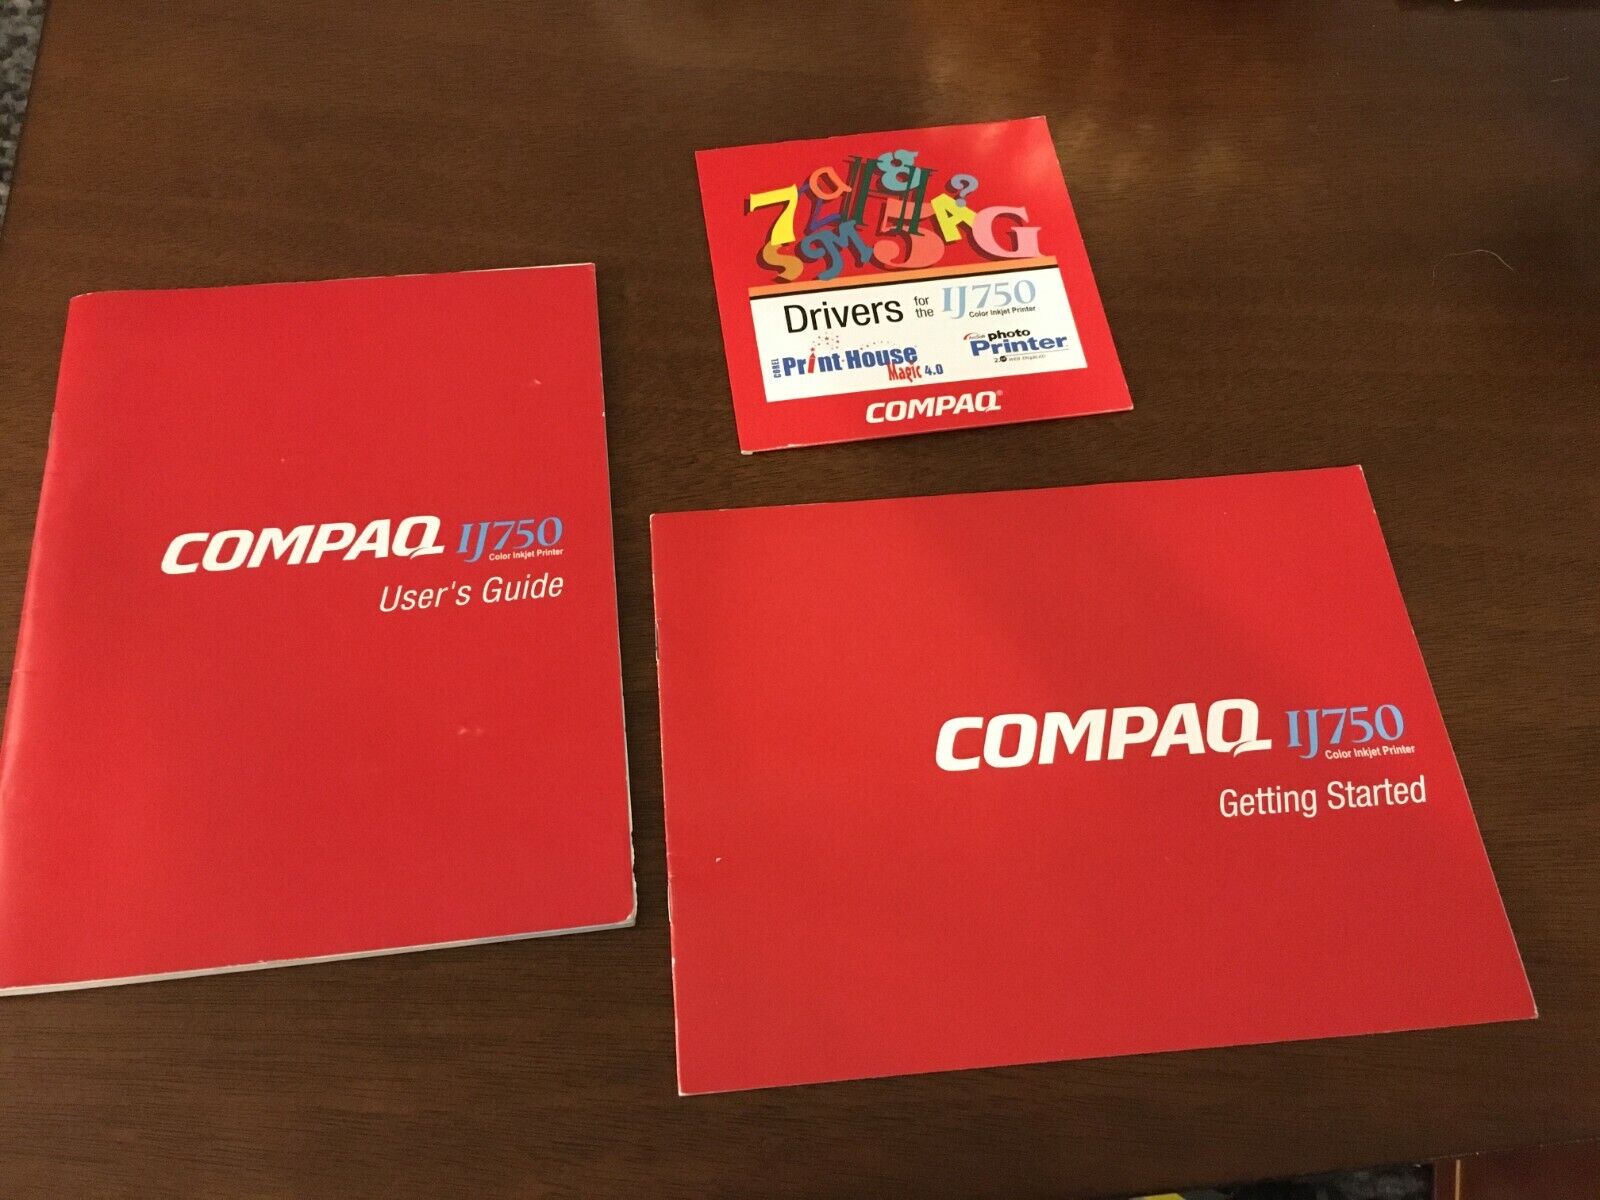 Compaq IJ750 Printer Software, User's Guide, Quick Start - Very Good Shape